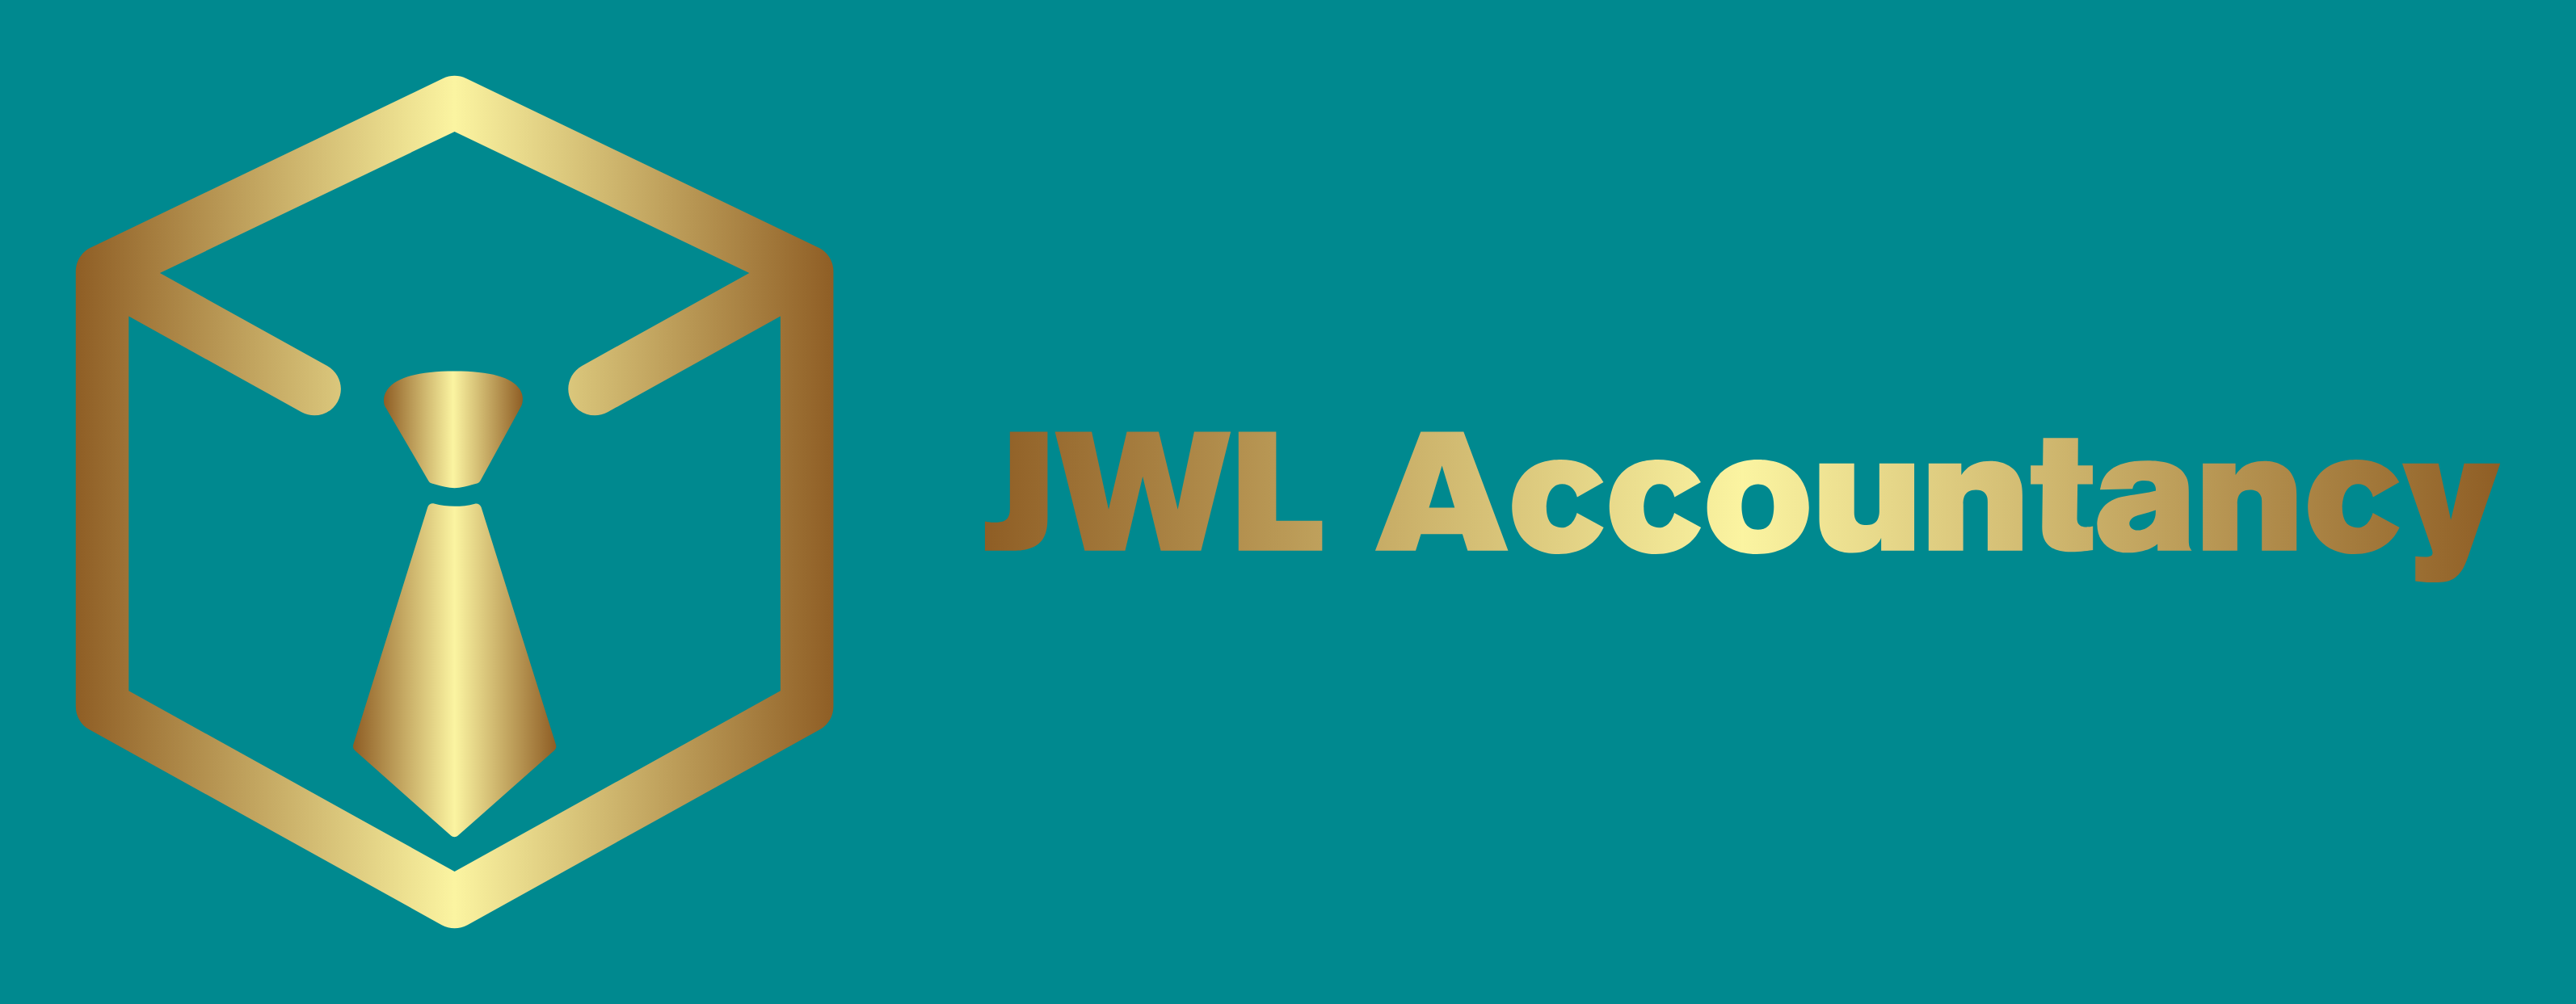 JWL Accountancy Logo